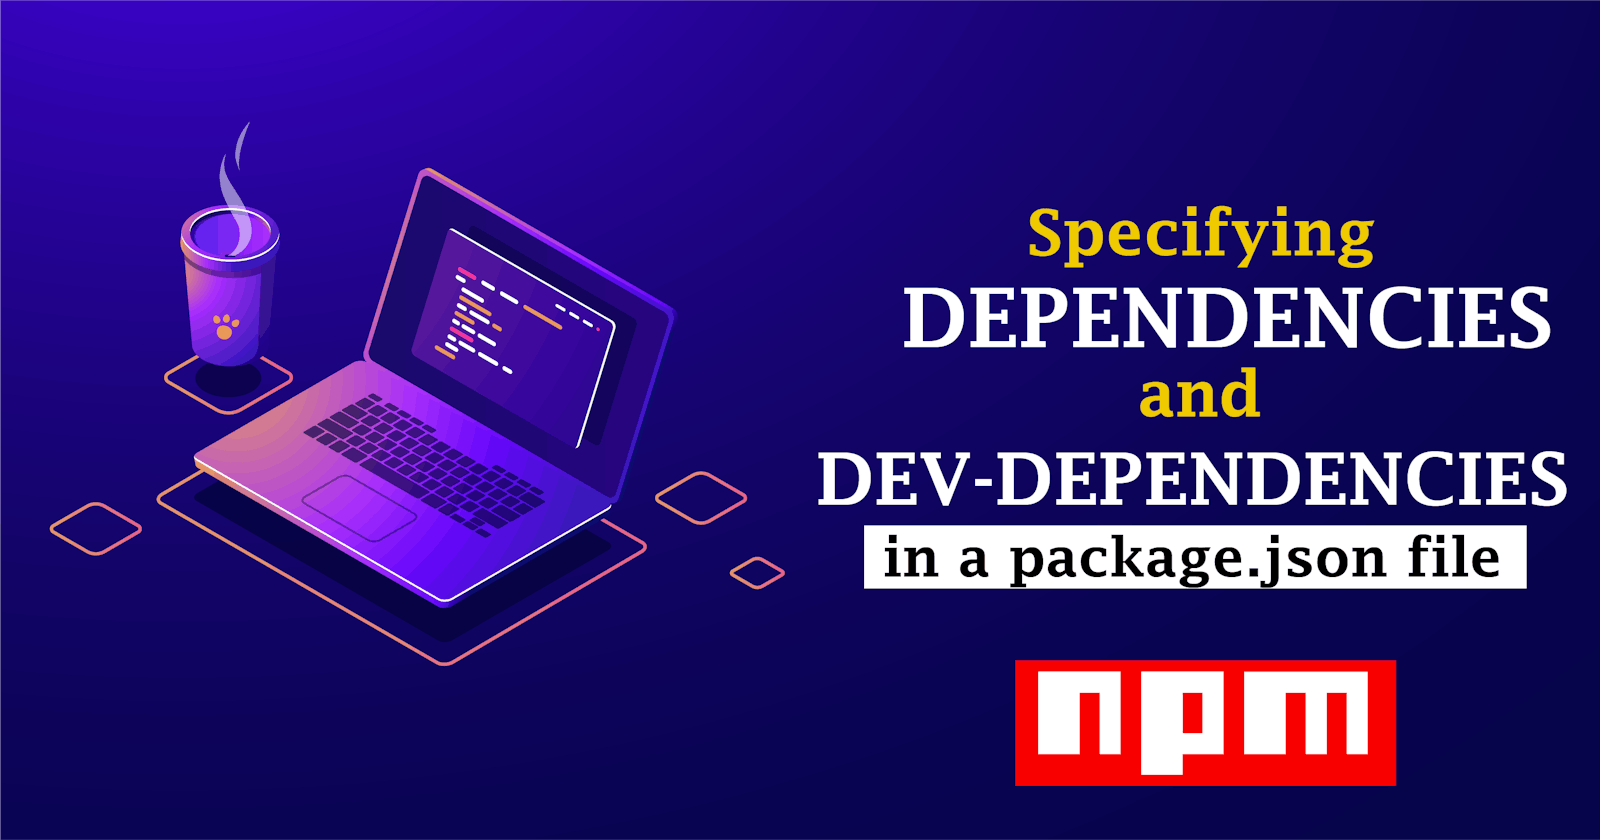 Specifying dependencies and devDependencies in a package.json file